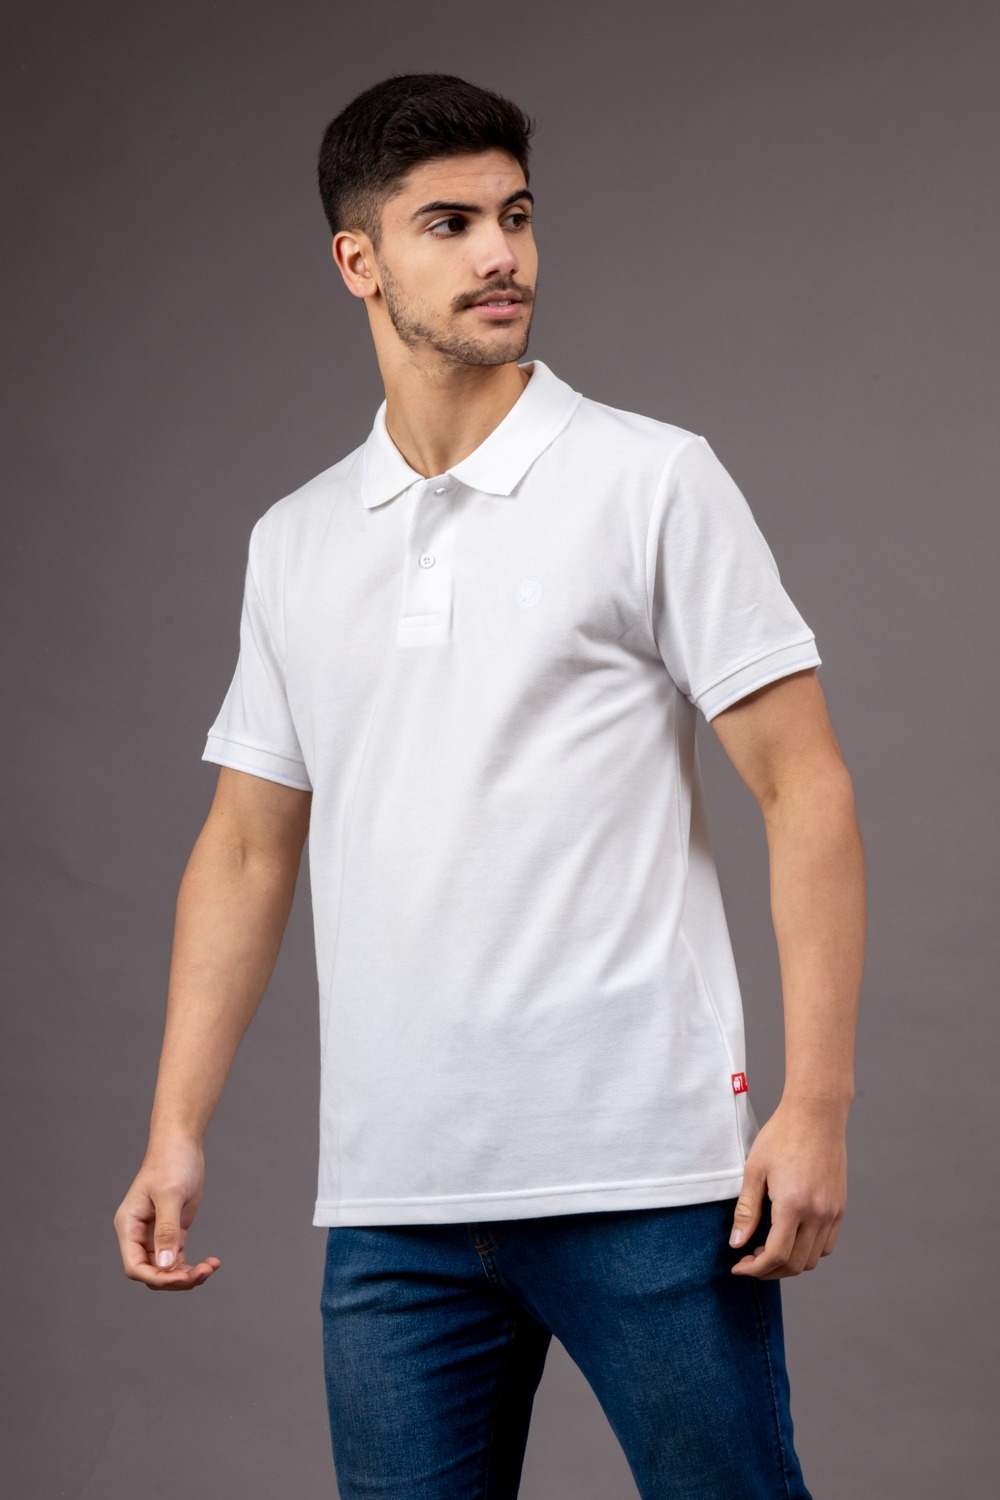 Men's White Half Sleeves Polo Plain Casual T-Shirt